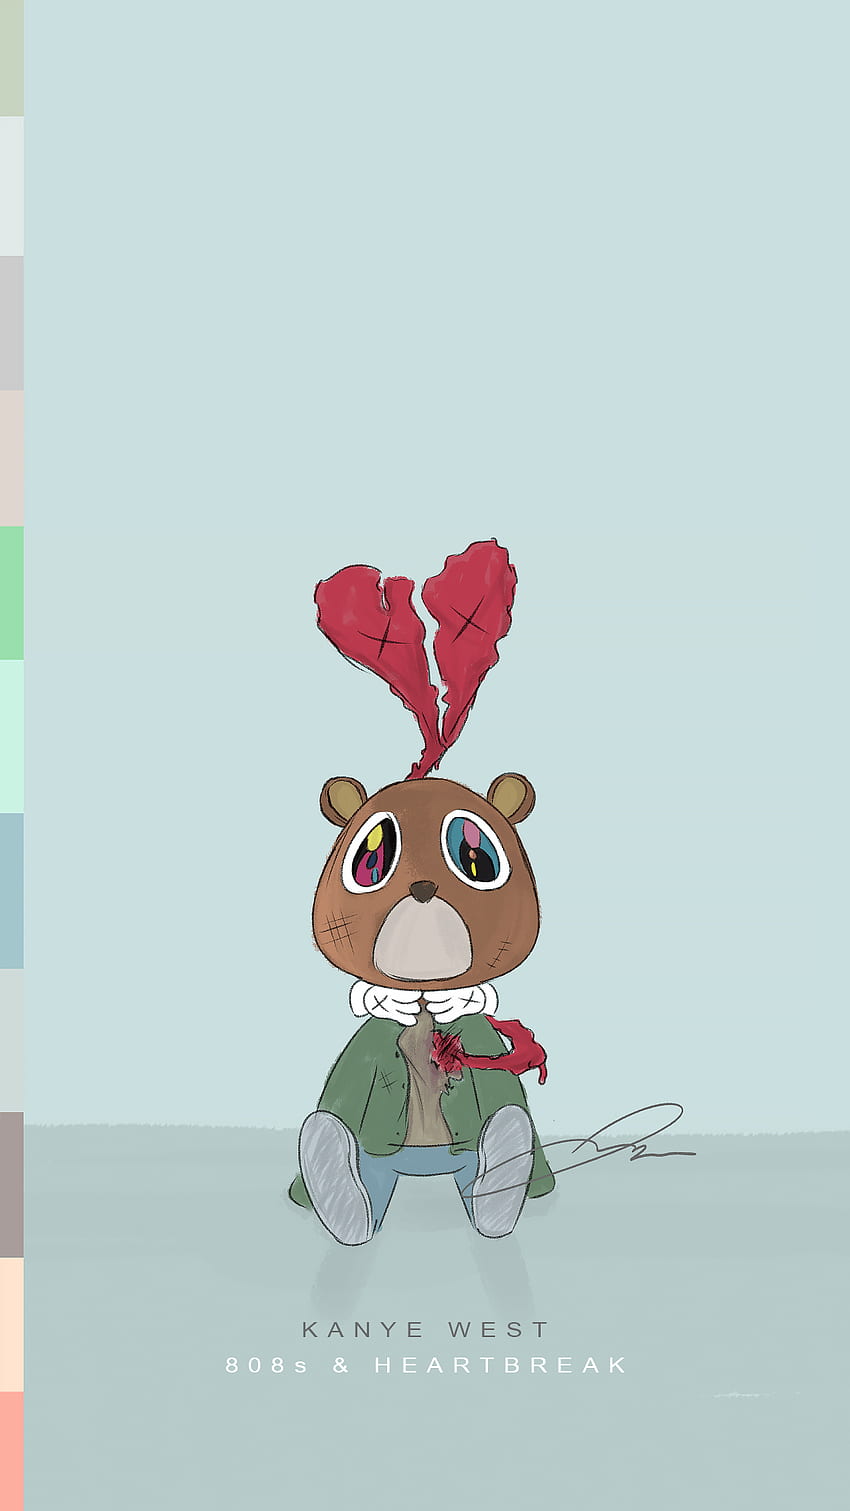 CM Designs on Twitter Kanye West  808s amp Heartbreak iPhone Wallpaper  httpstcobAenser2fo  Twitter